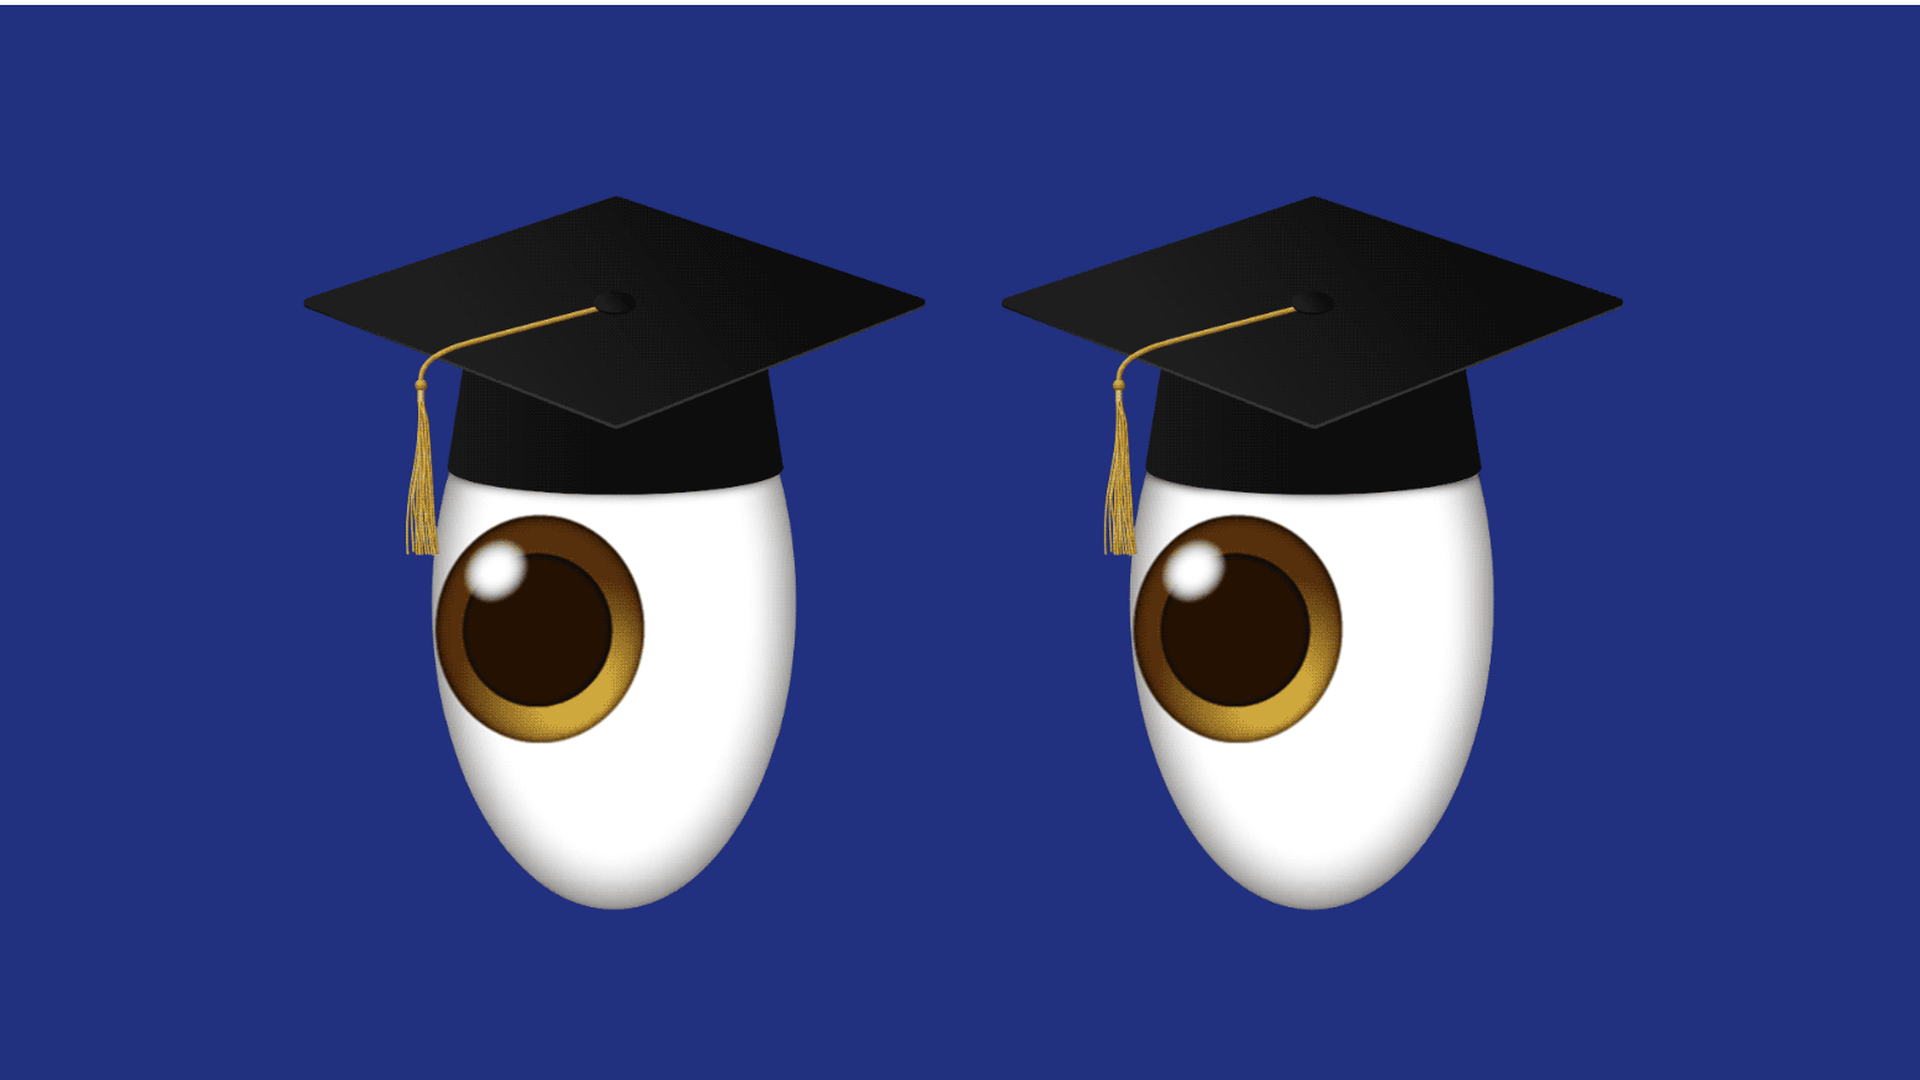 Moving eyeballs with graduation caps 